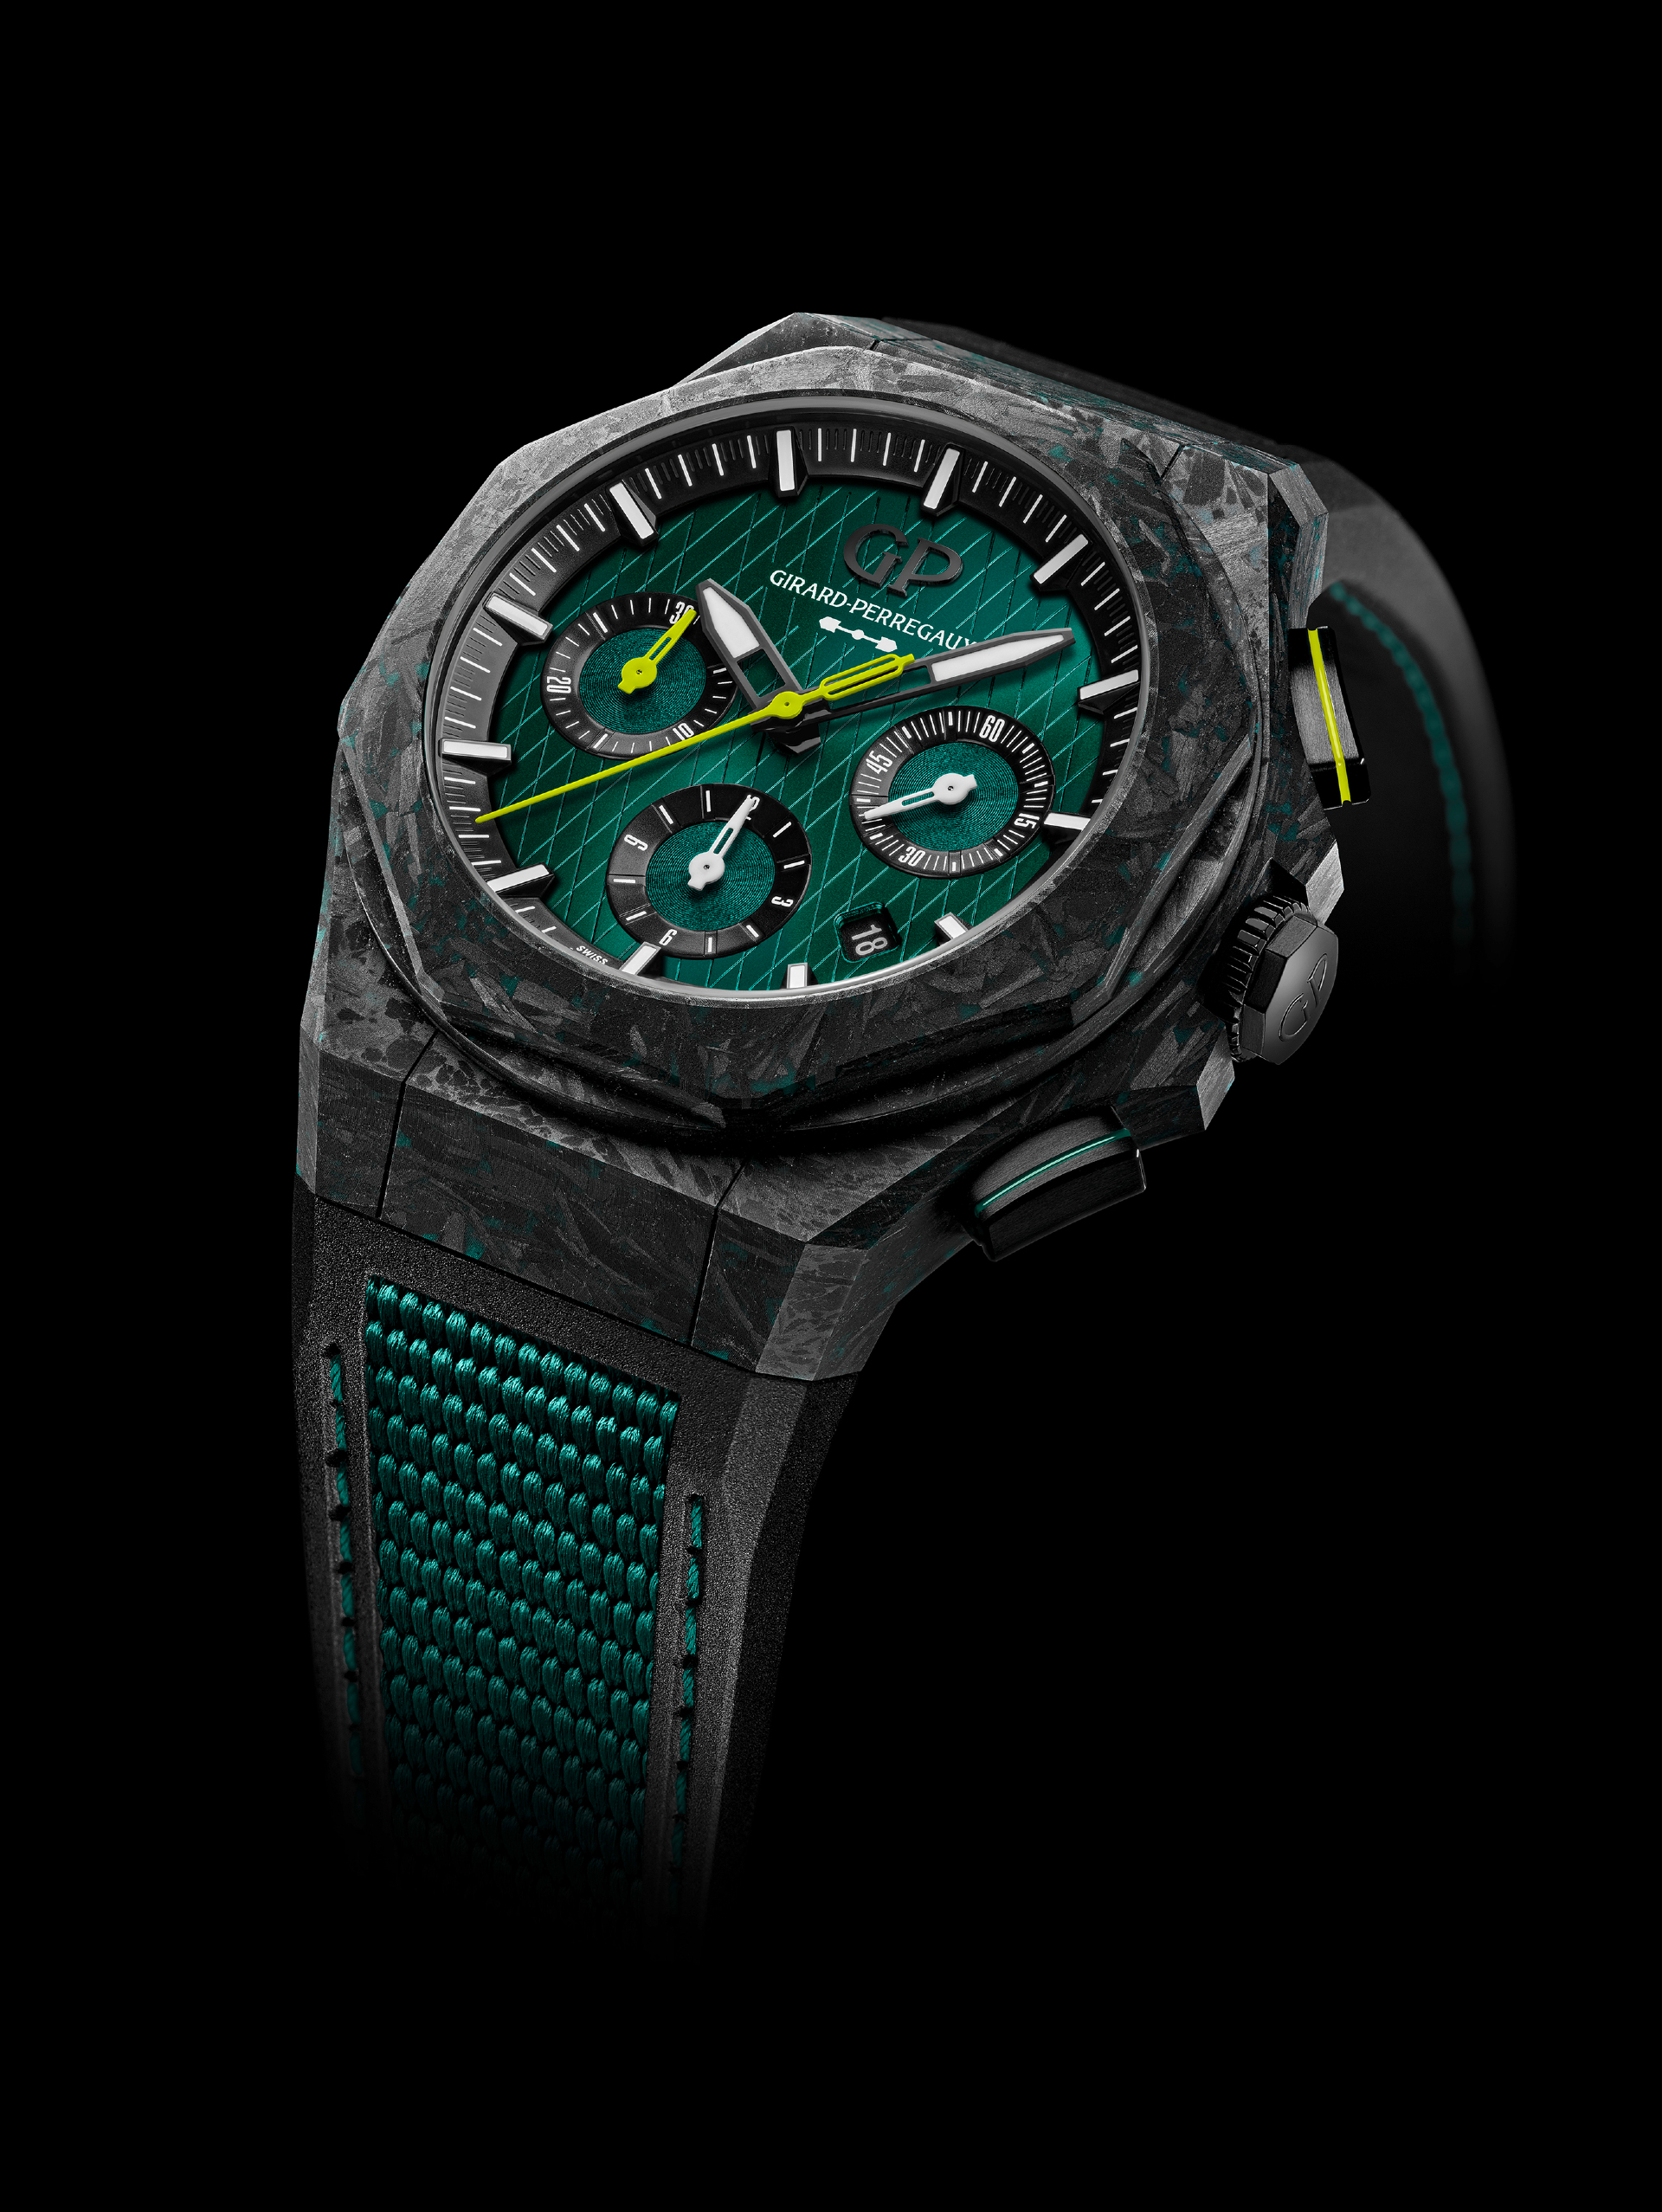 Часы Laureato Absolute Chronograph AM F1 Edition, Girard-Perregaux